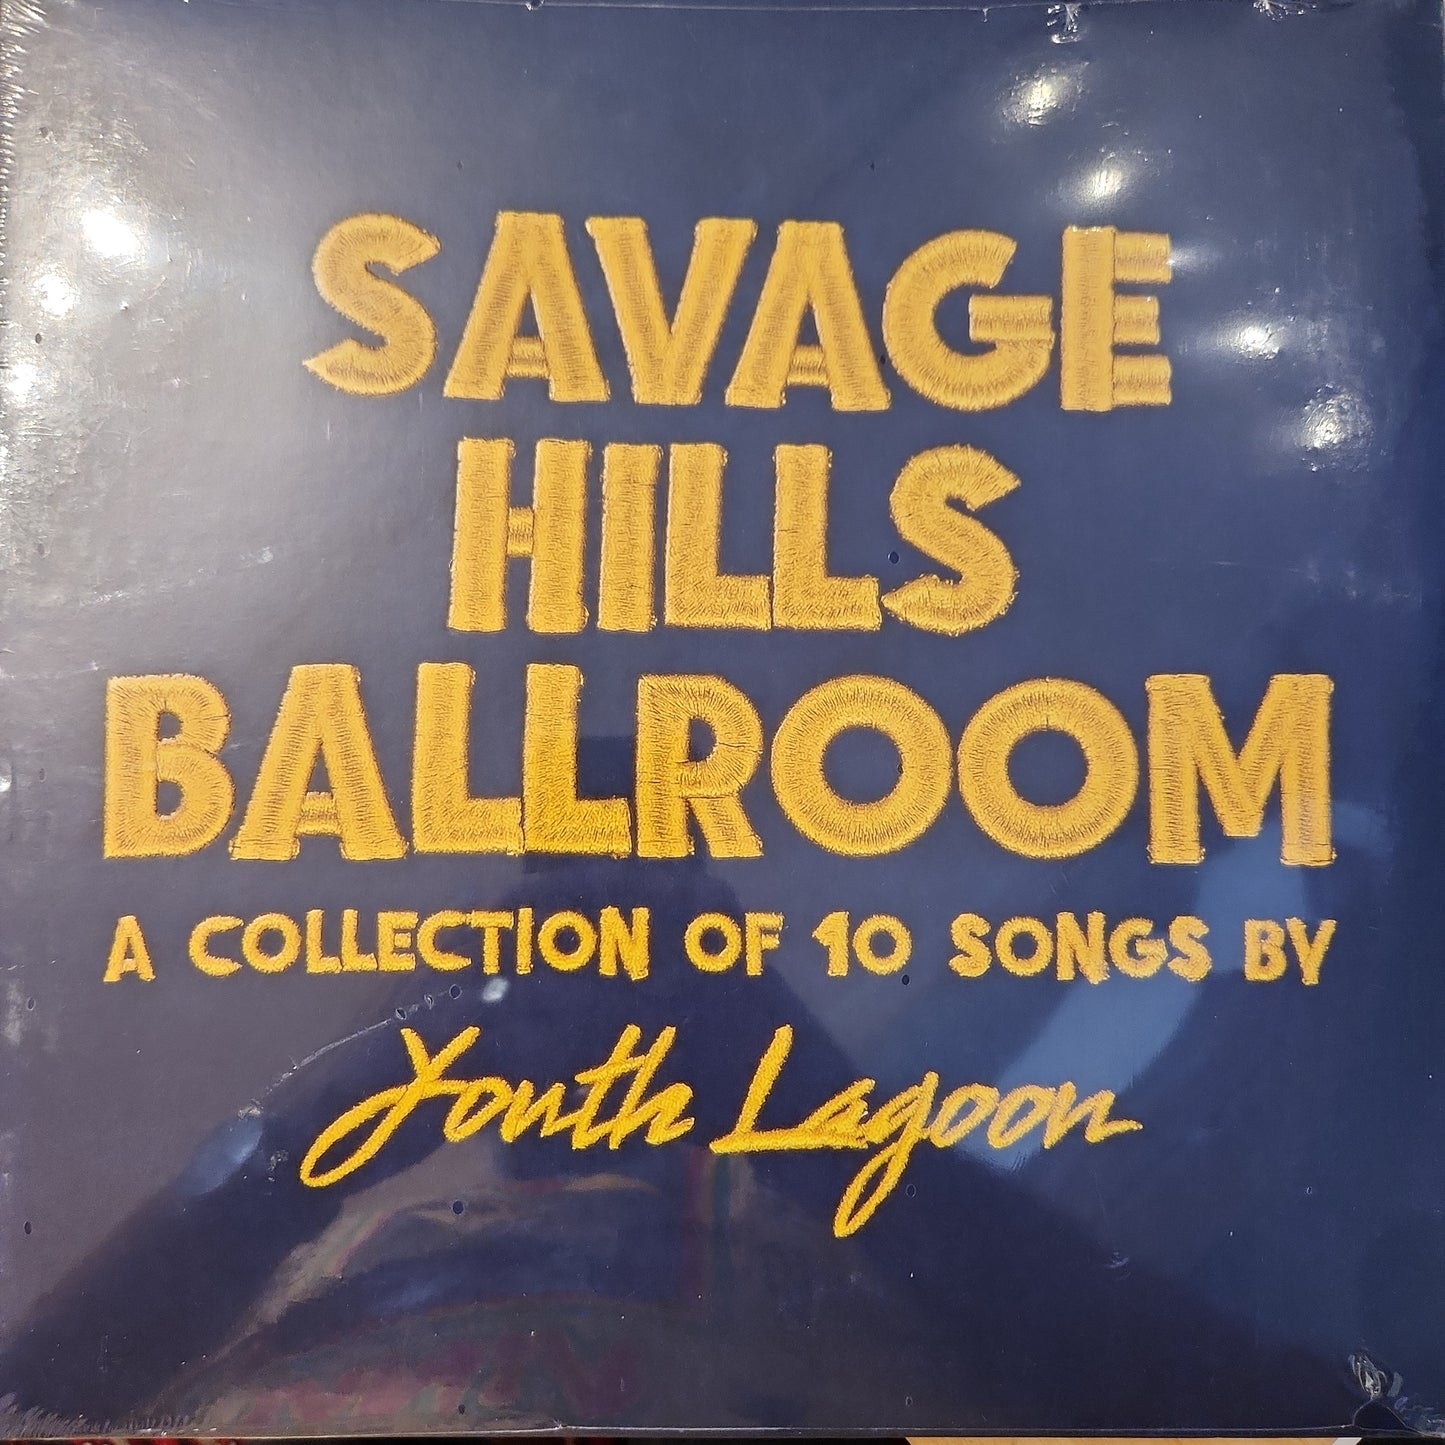 Youth Lagoon - Savage Hills Ballroom - Vinyl LP